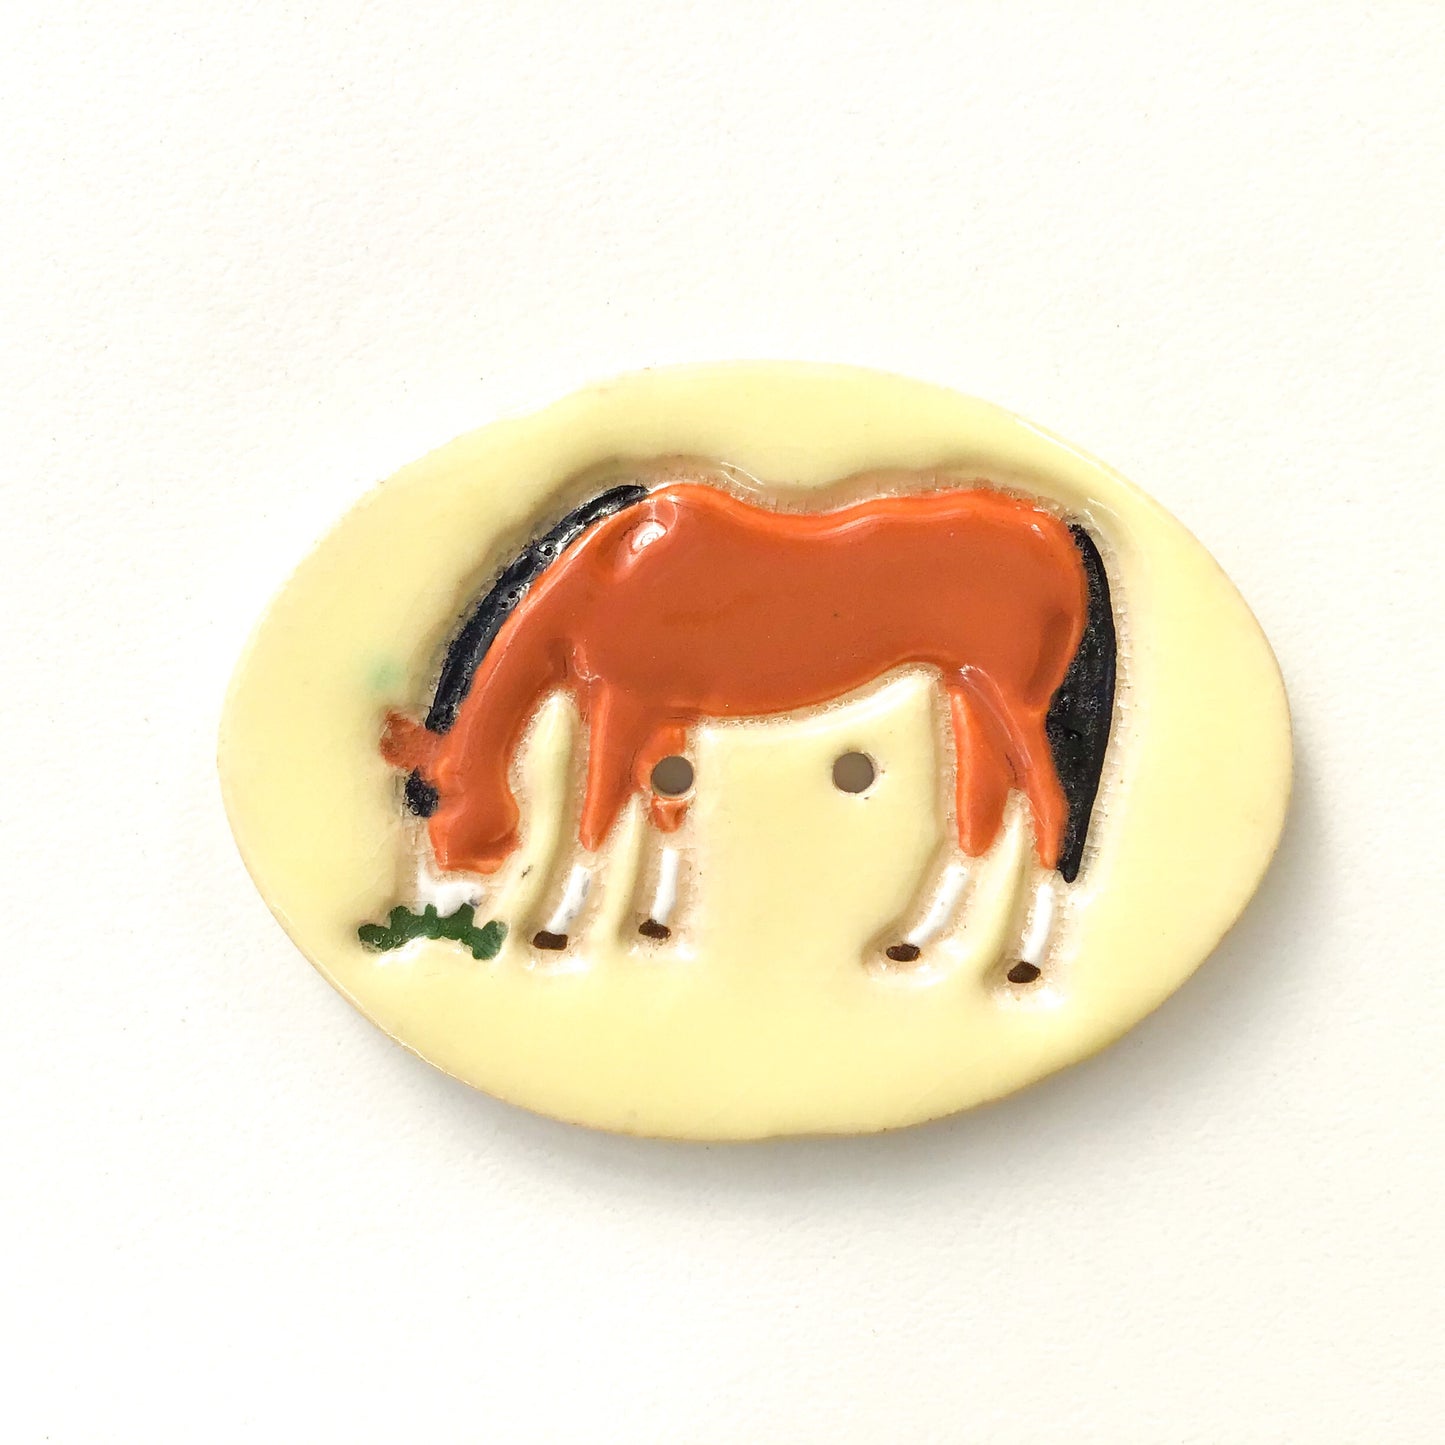 Large Ceramic Horse Button - Decorative Clay Horse Button - 2 1/8" x 1 5/8"